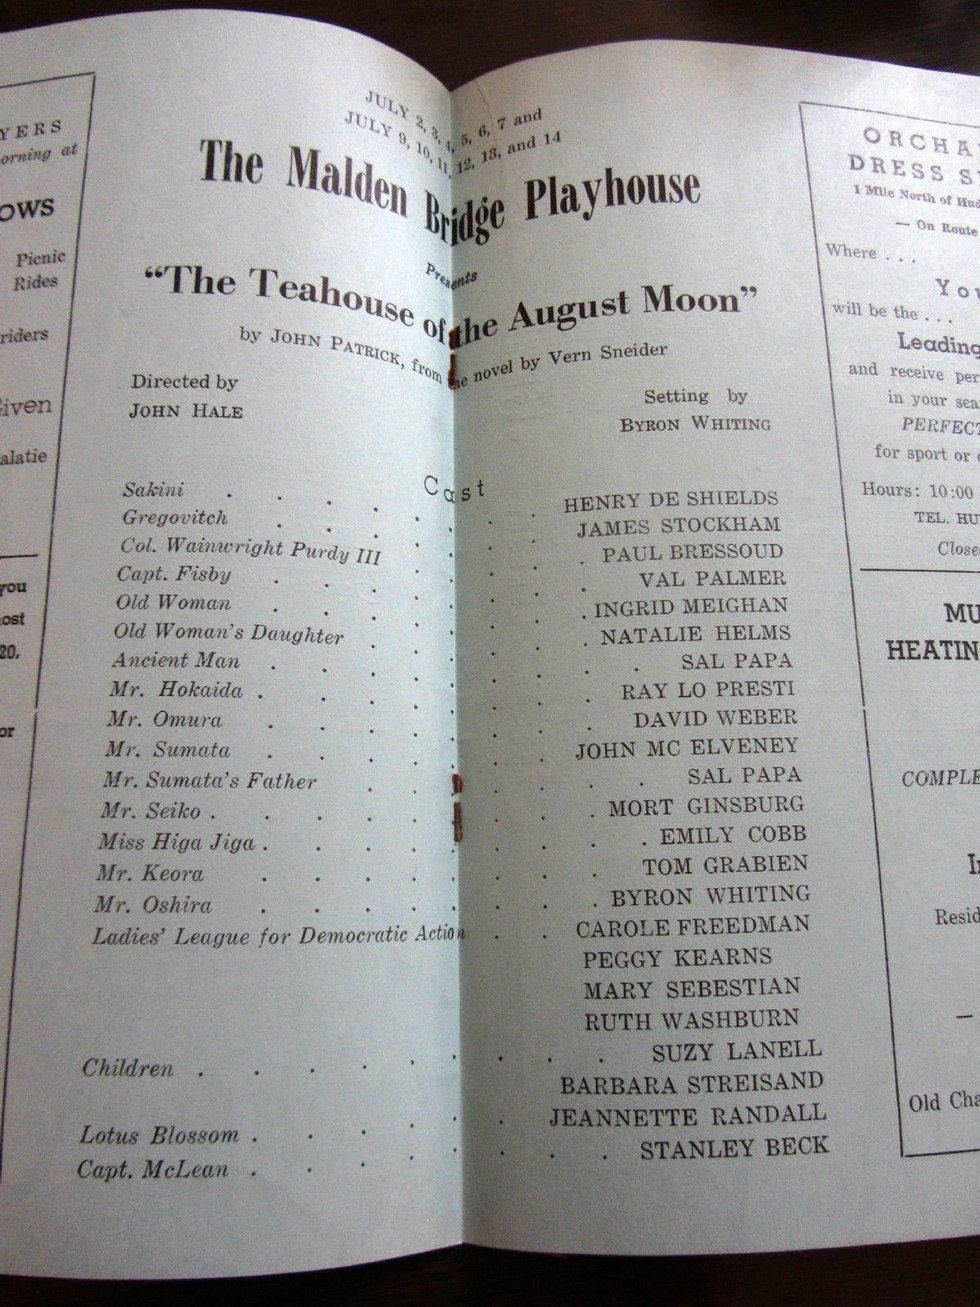 Program for Teahouse at Malden Bridge Playhouse